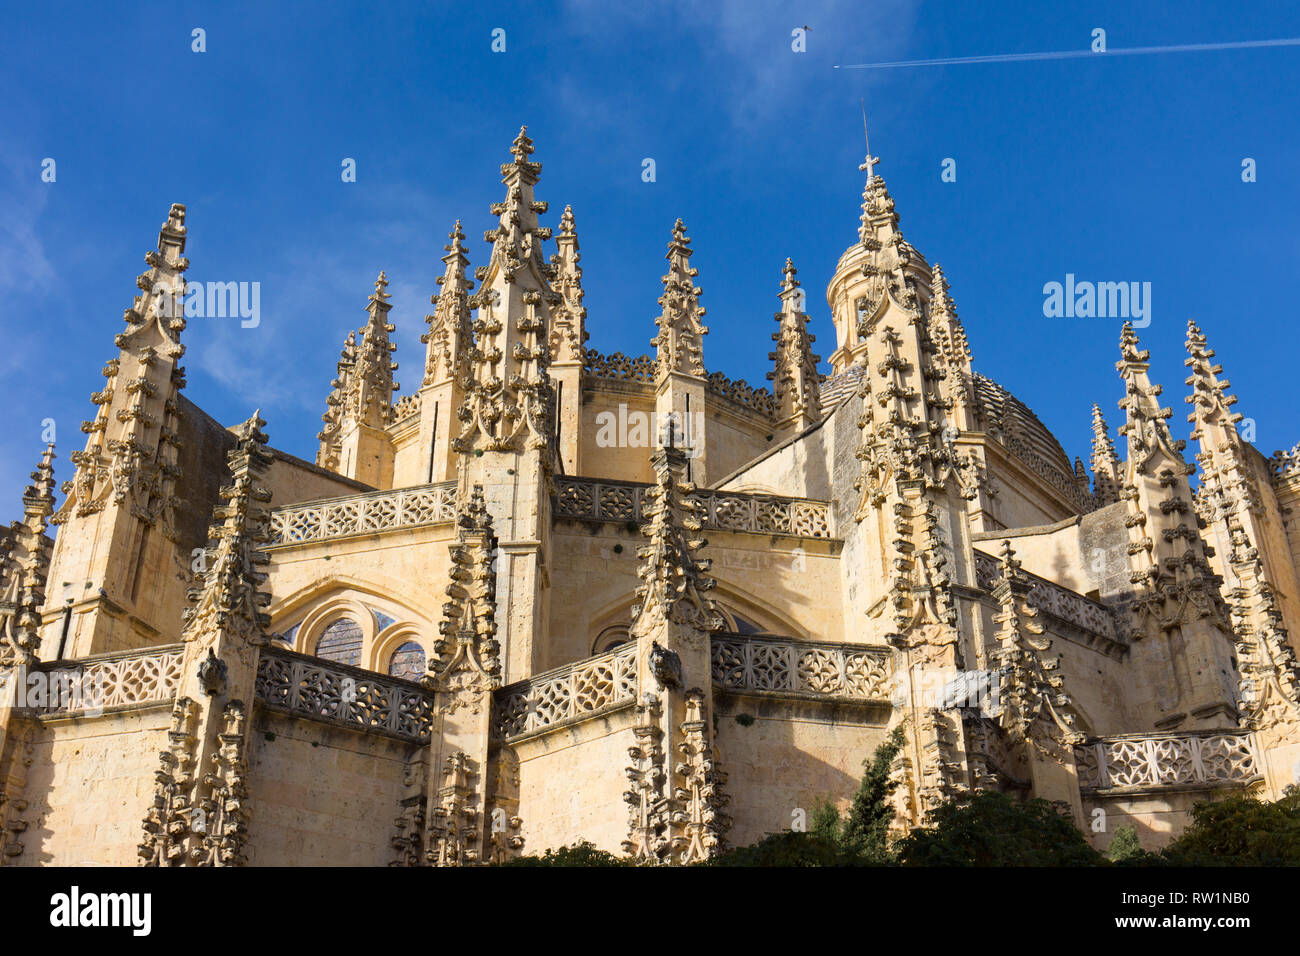 Detail of architecture and columns of Catedral de Segovia, Segovia Cathedral, Segovia, Spain Stock Photo